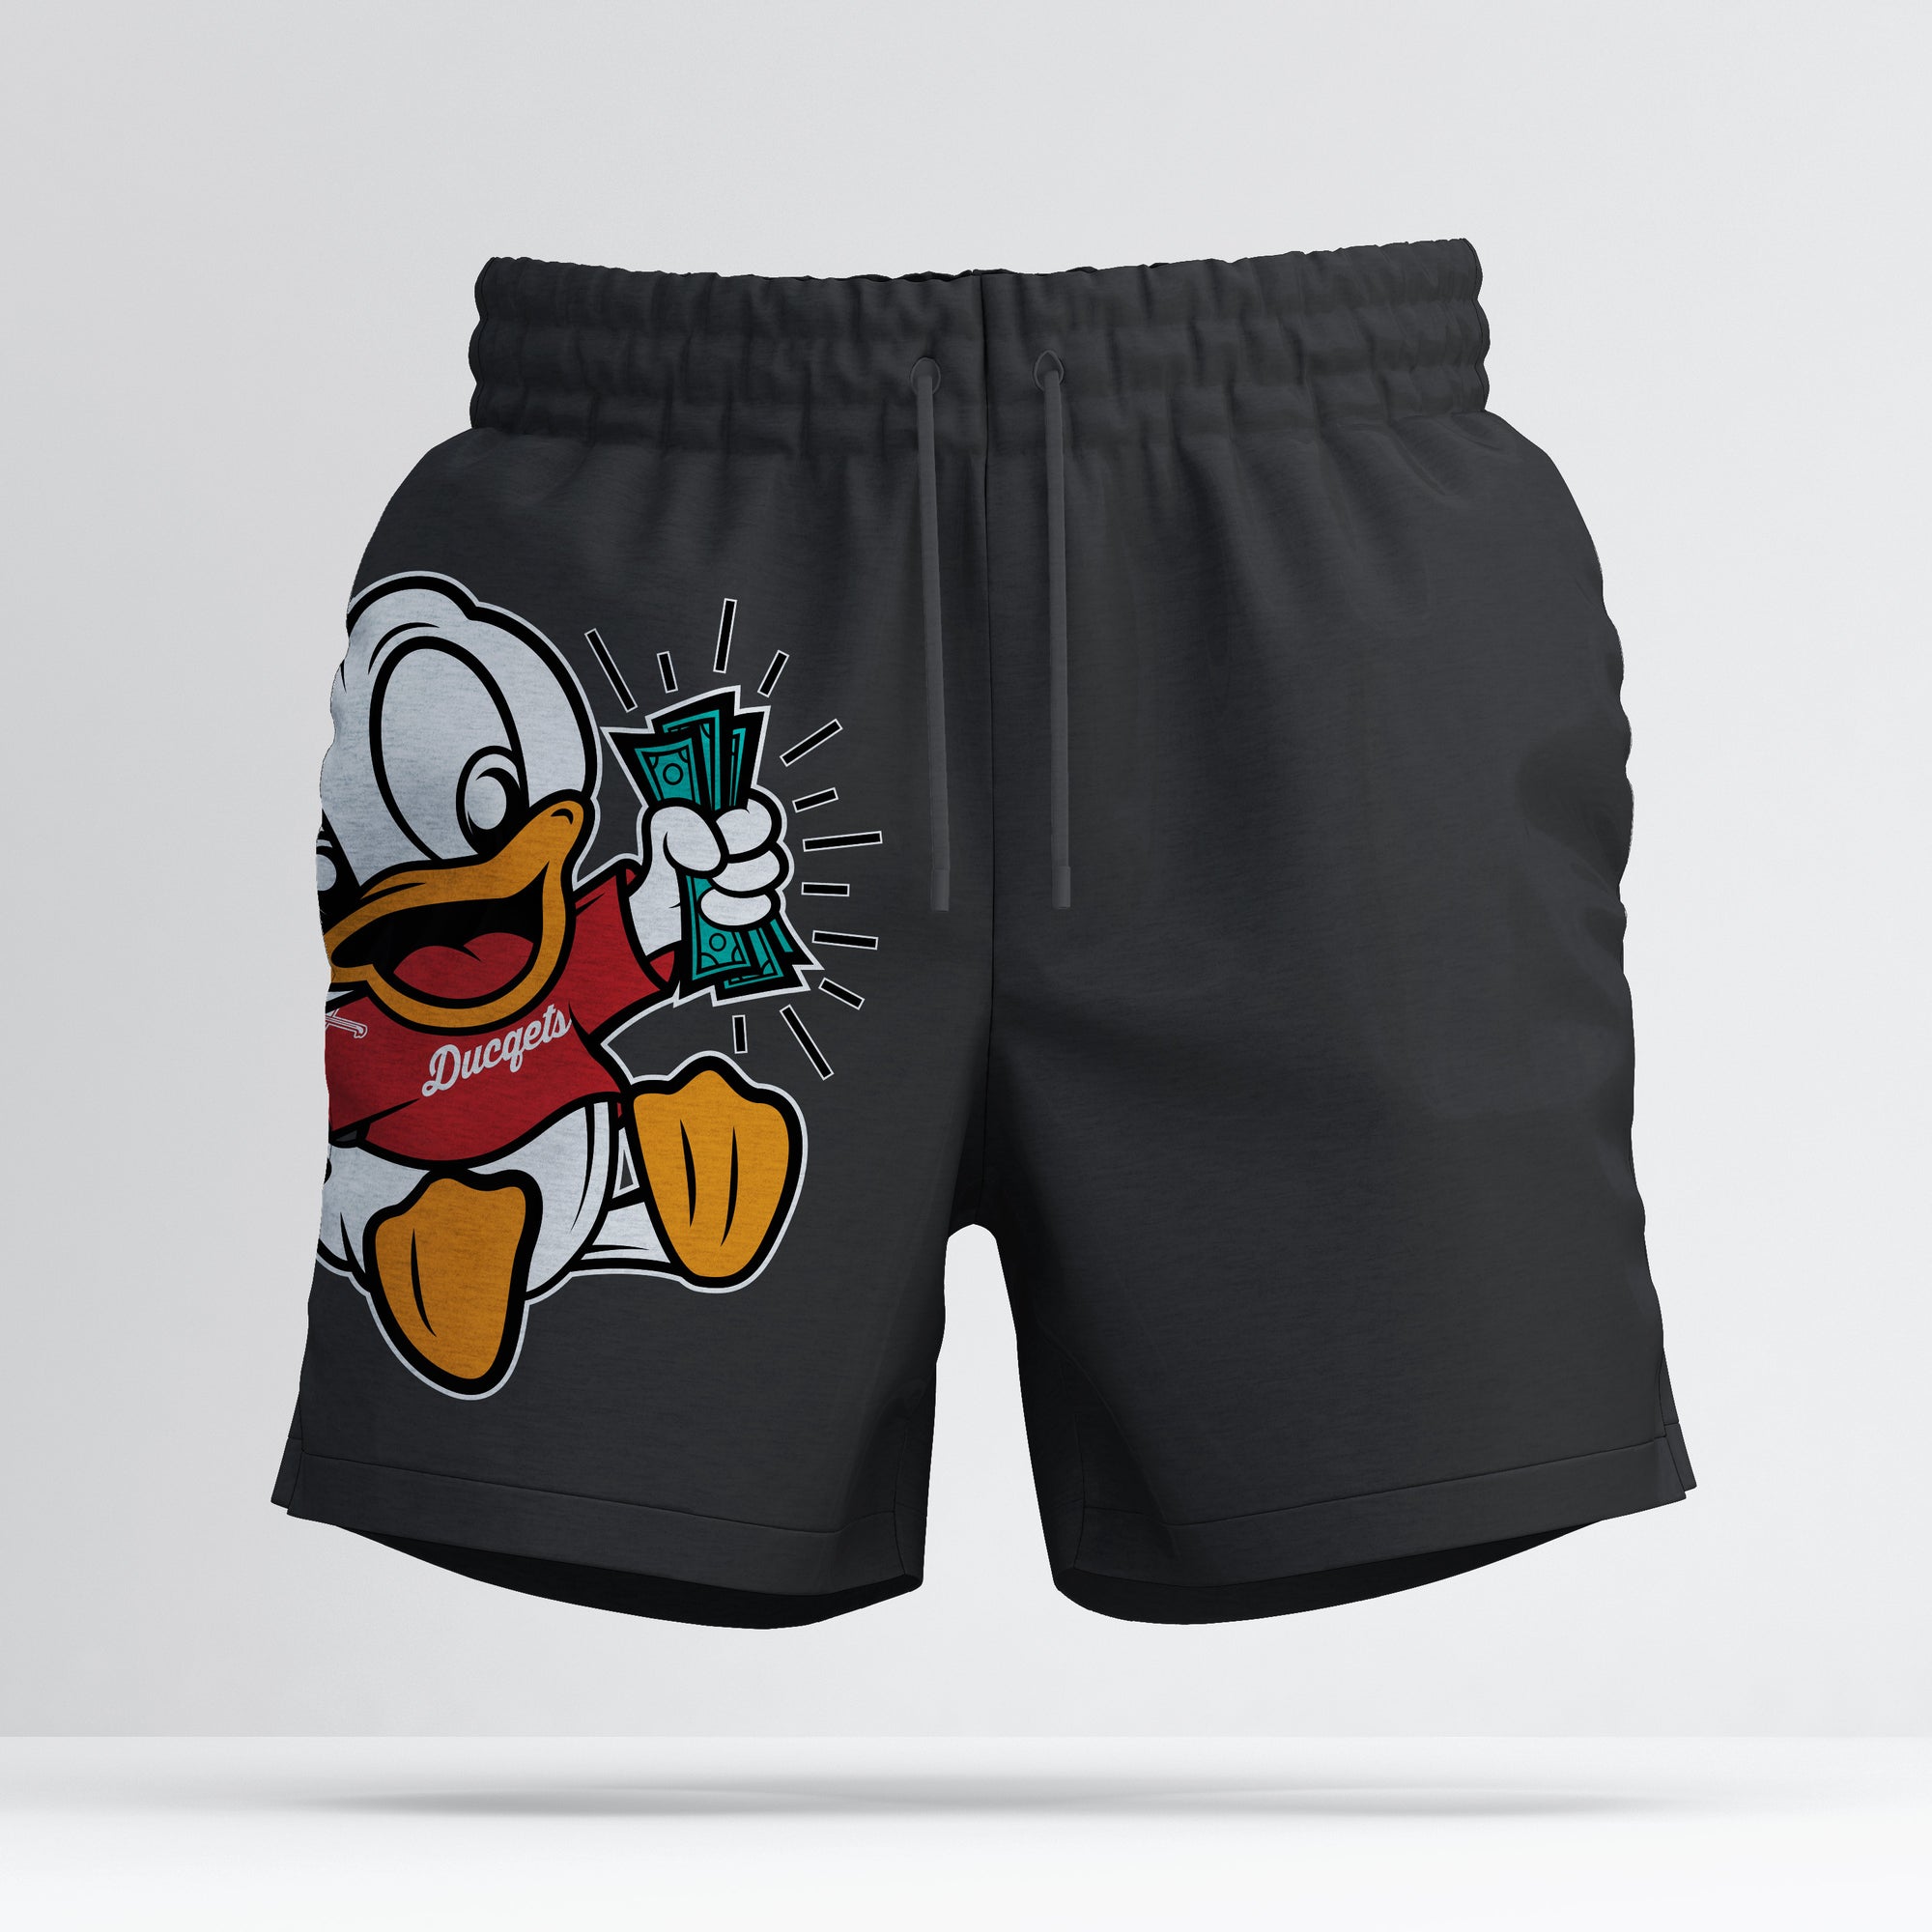 Cash Duckling Shorts